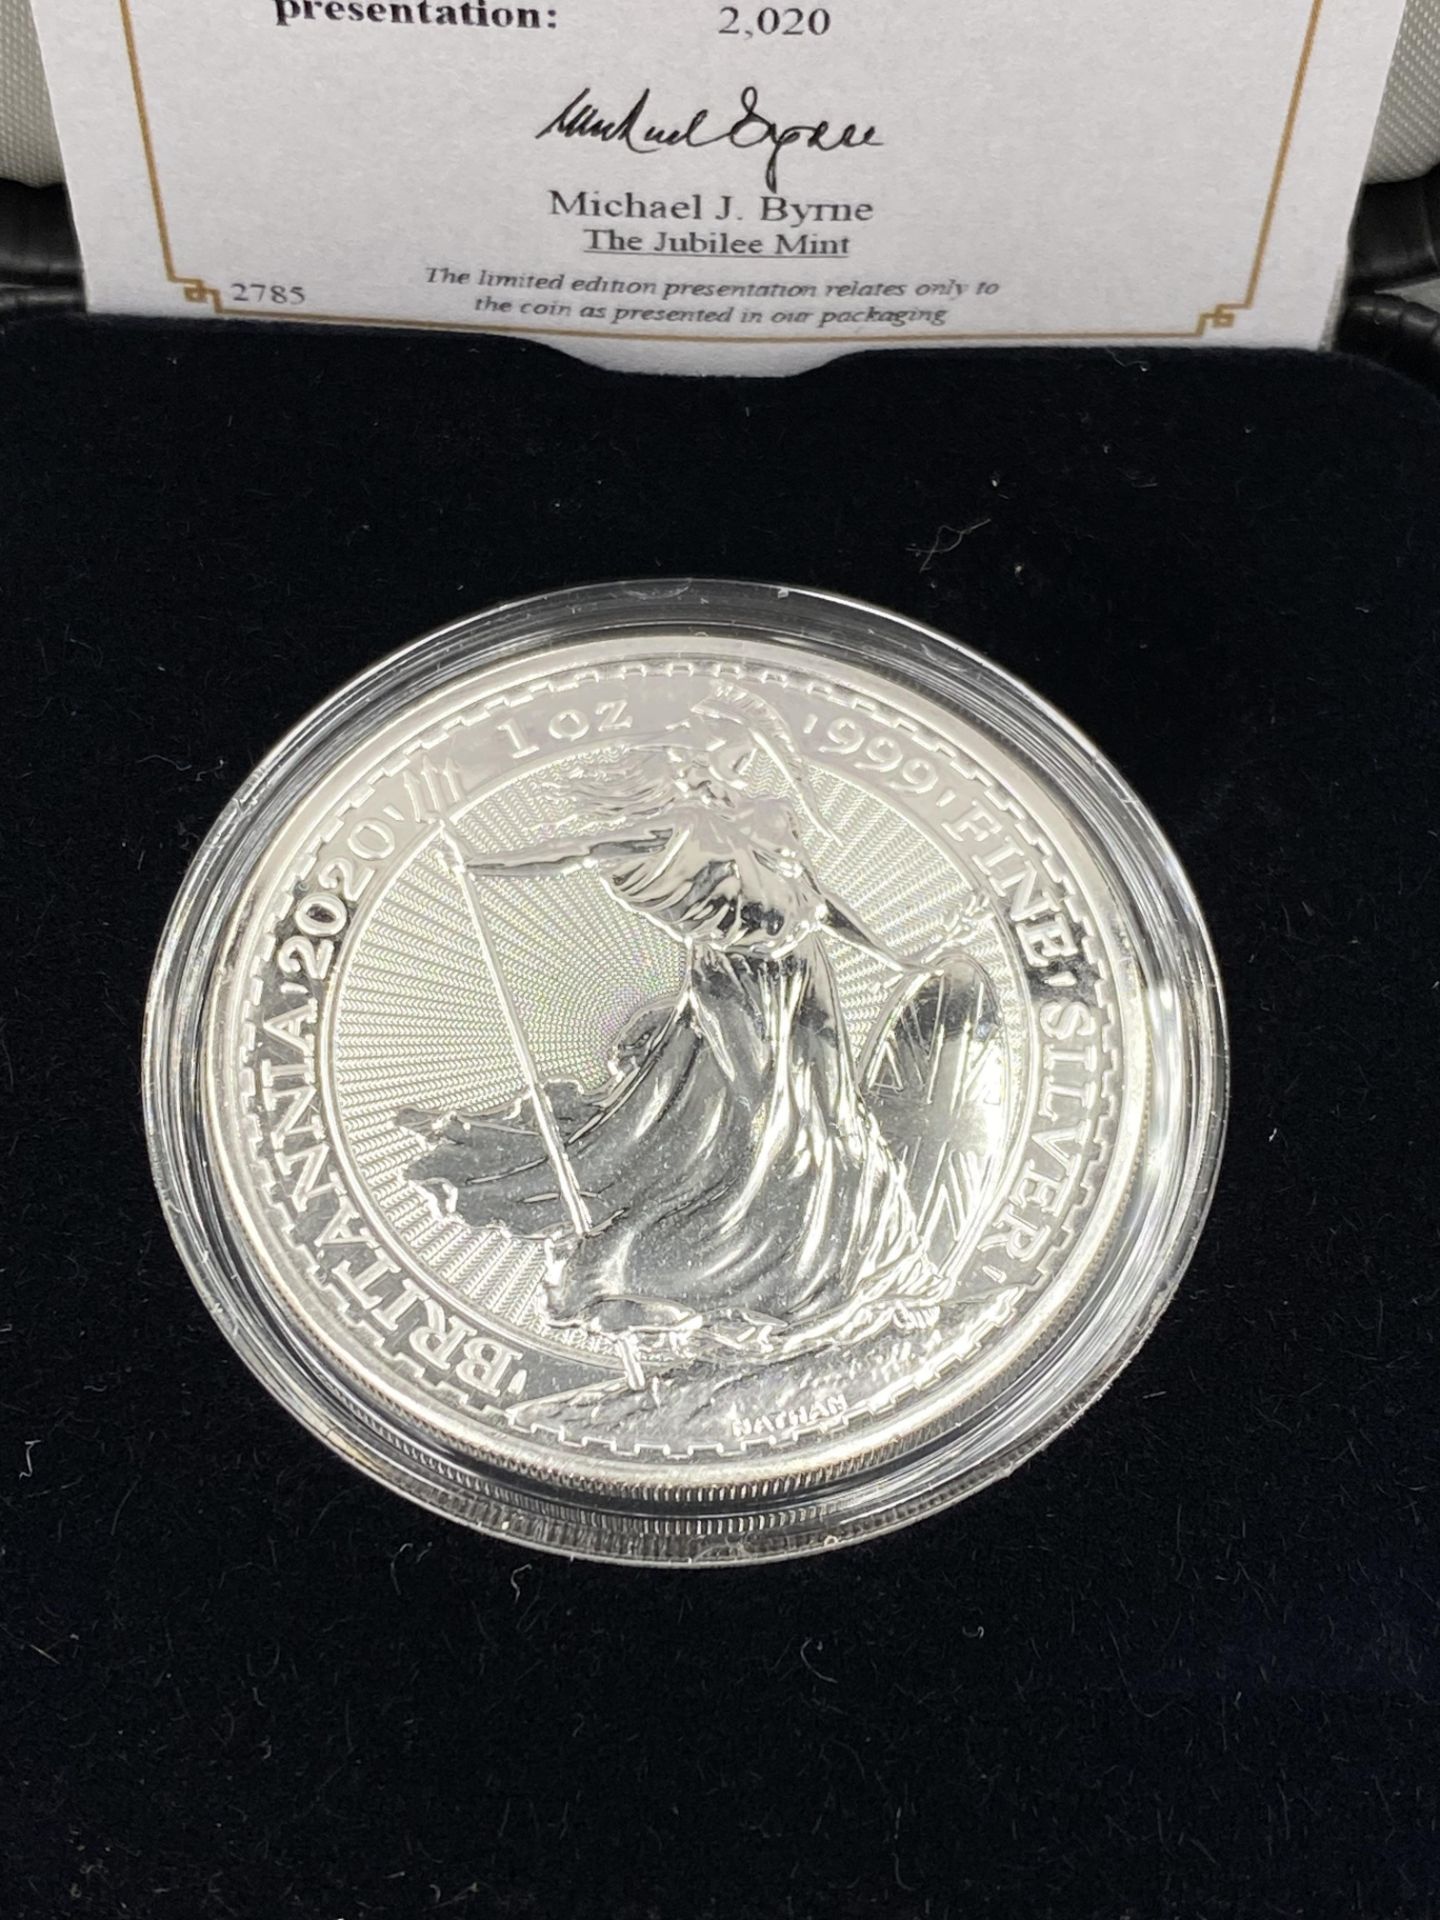 Jubilee Mint 2020 UK silver Britannia - Image 2 of 4